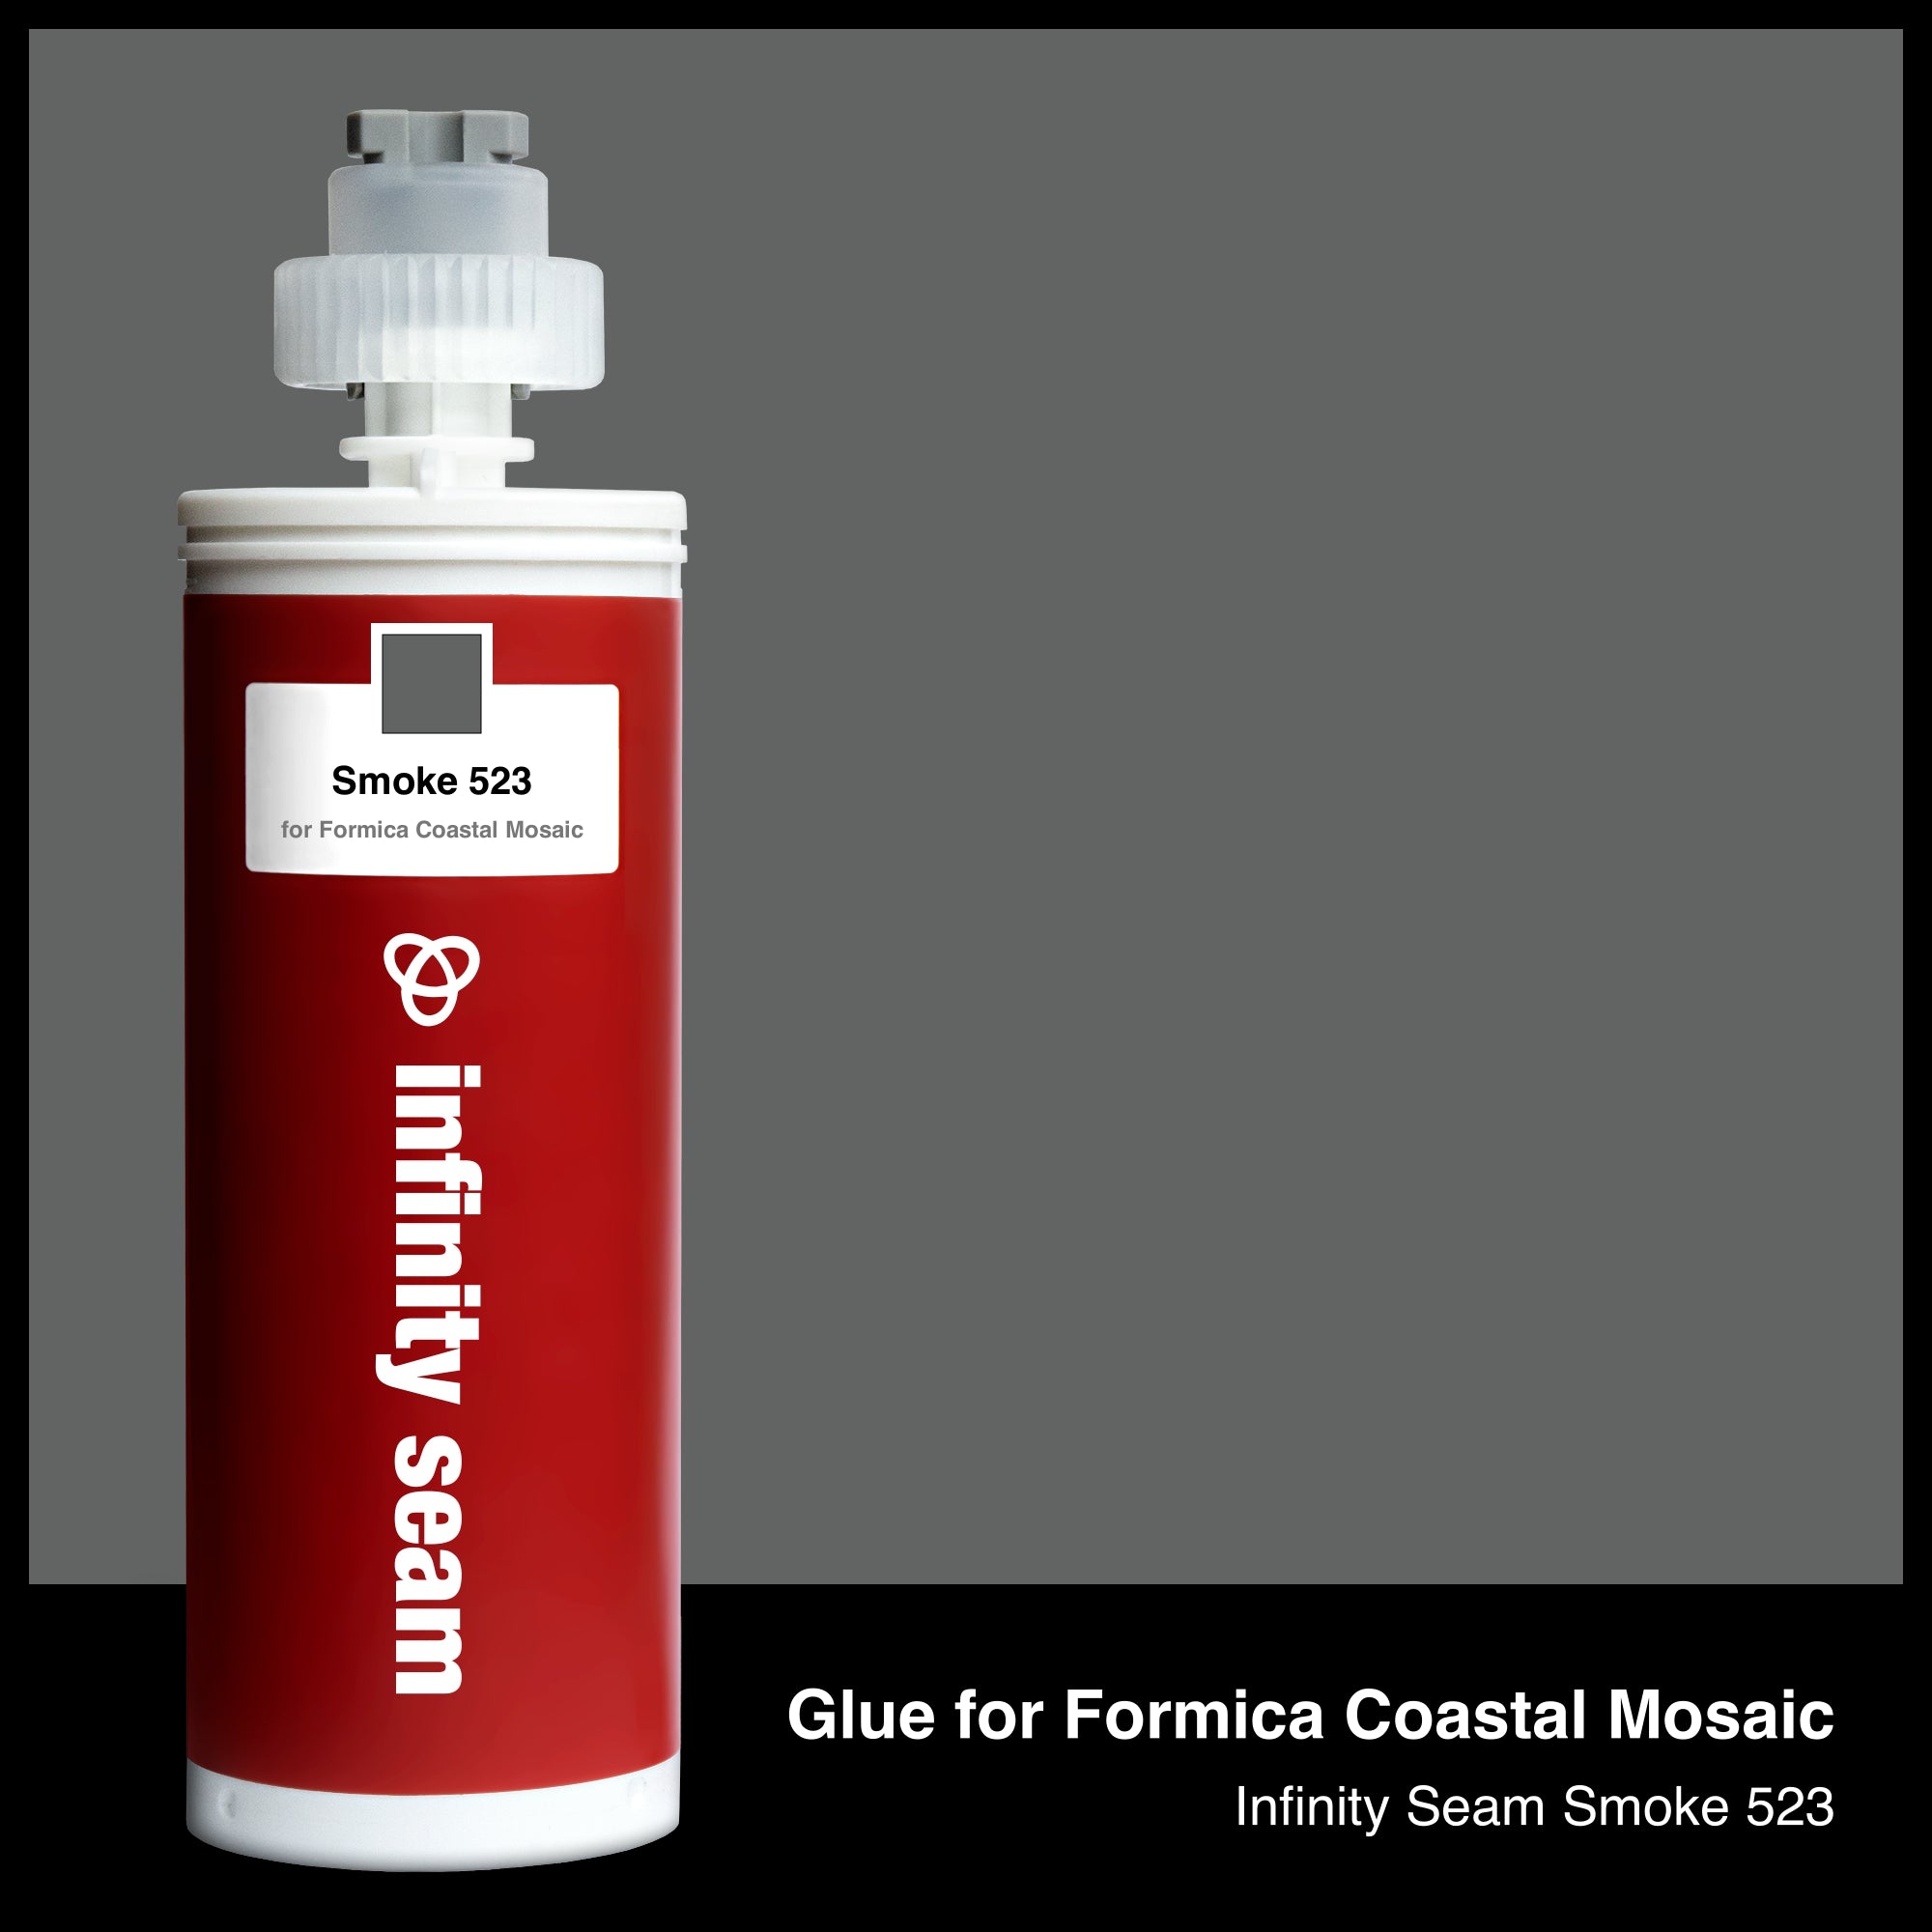 Glue for Formica Coastal Mosaic: Infinity Seam Smoke 523